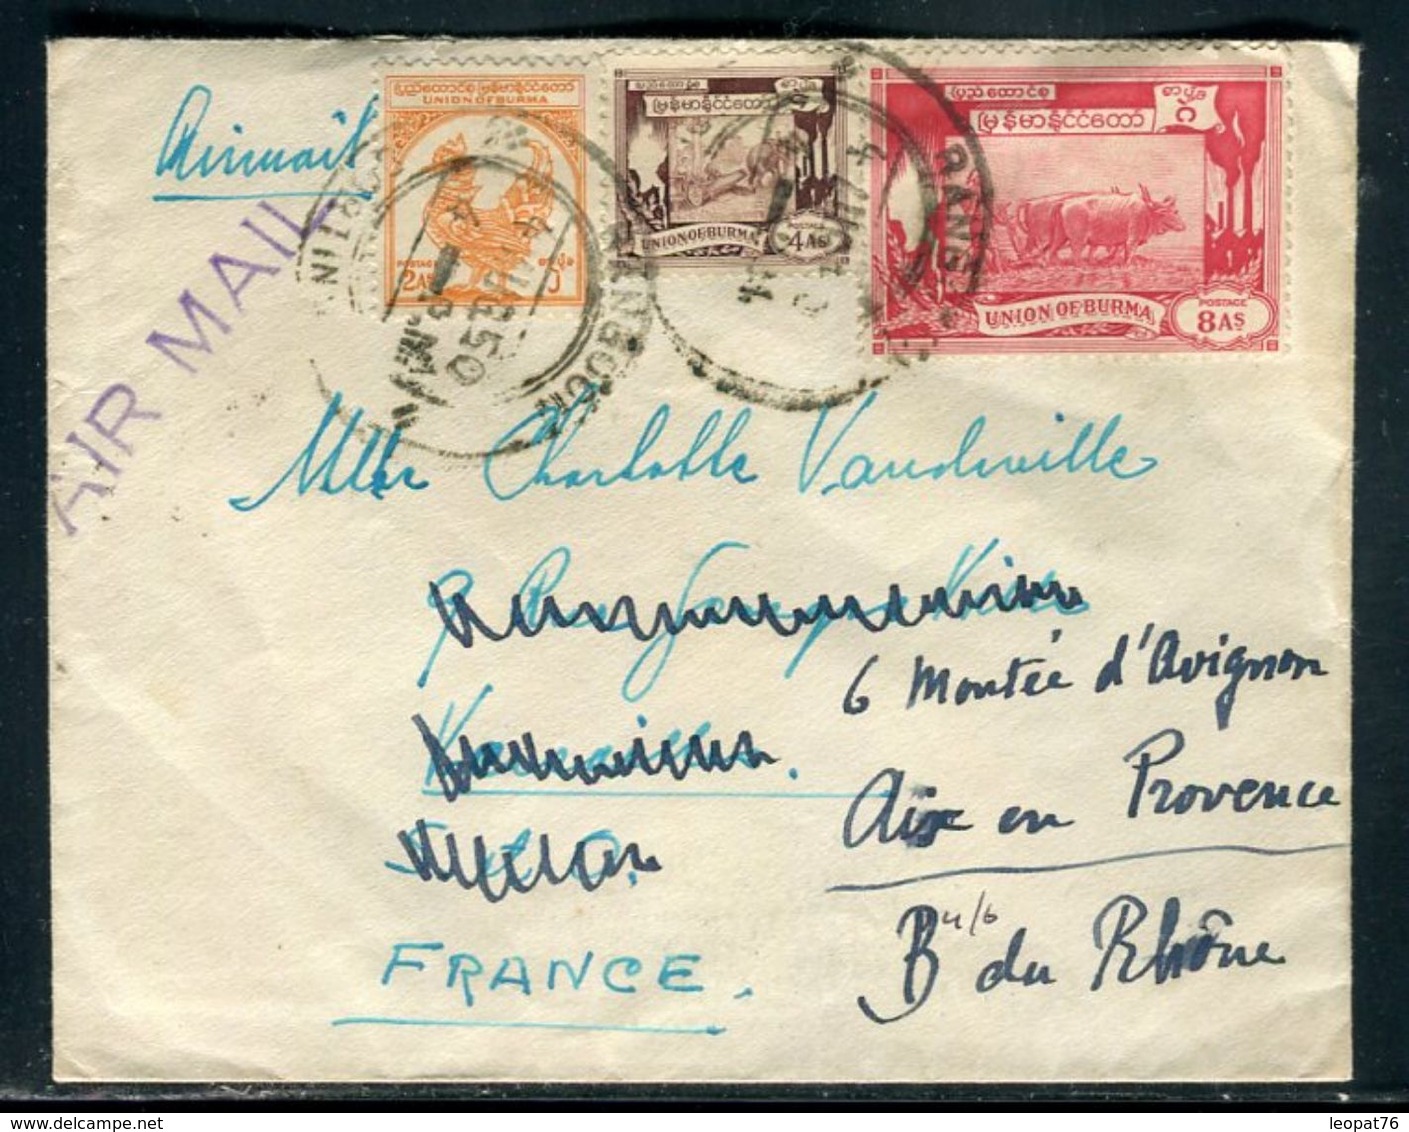 Myanmar / Burma - Enveloppe De Rangoon Pour La France En 1950 , Affranchissement Recto Et Verso - Ref F115 - Myanmar (Birmanie 1948-...)